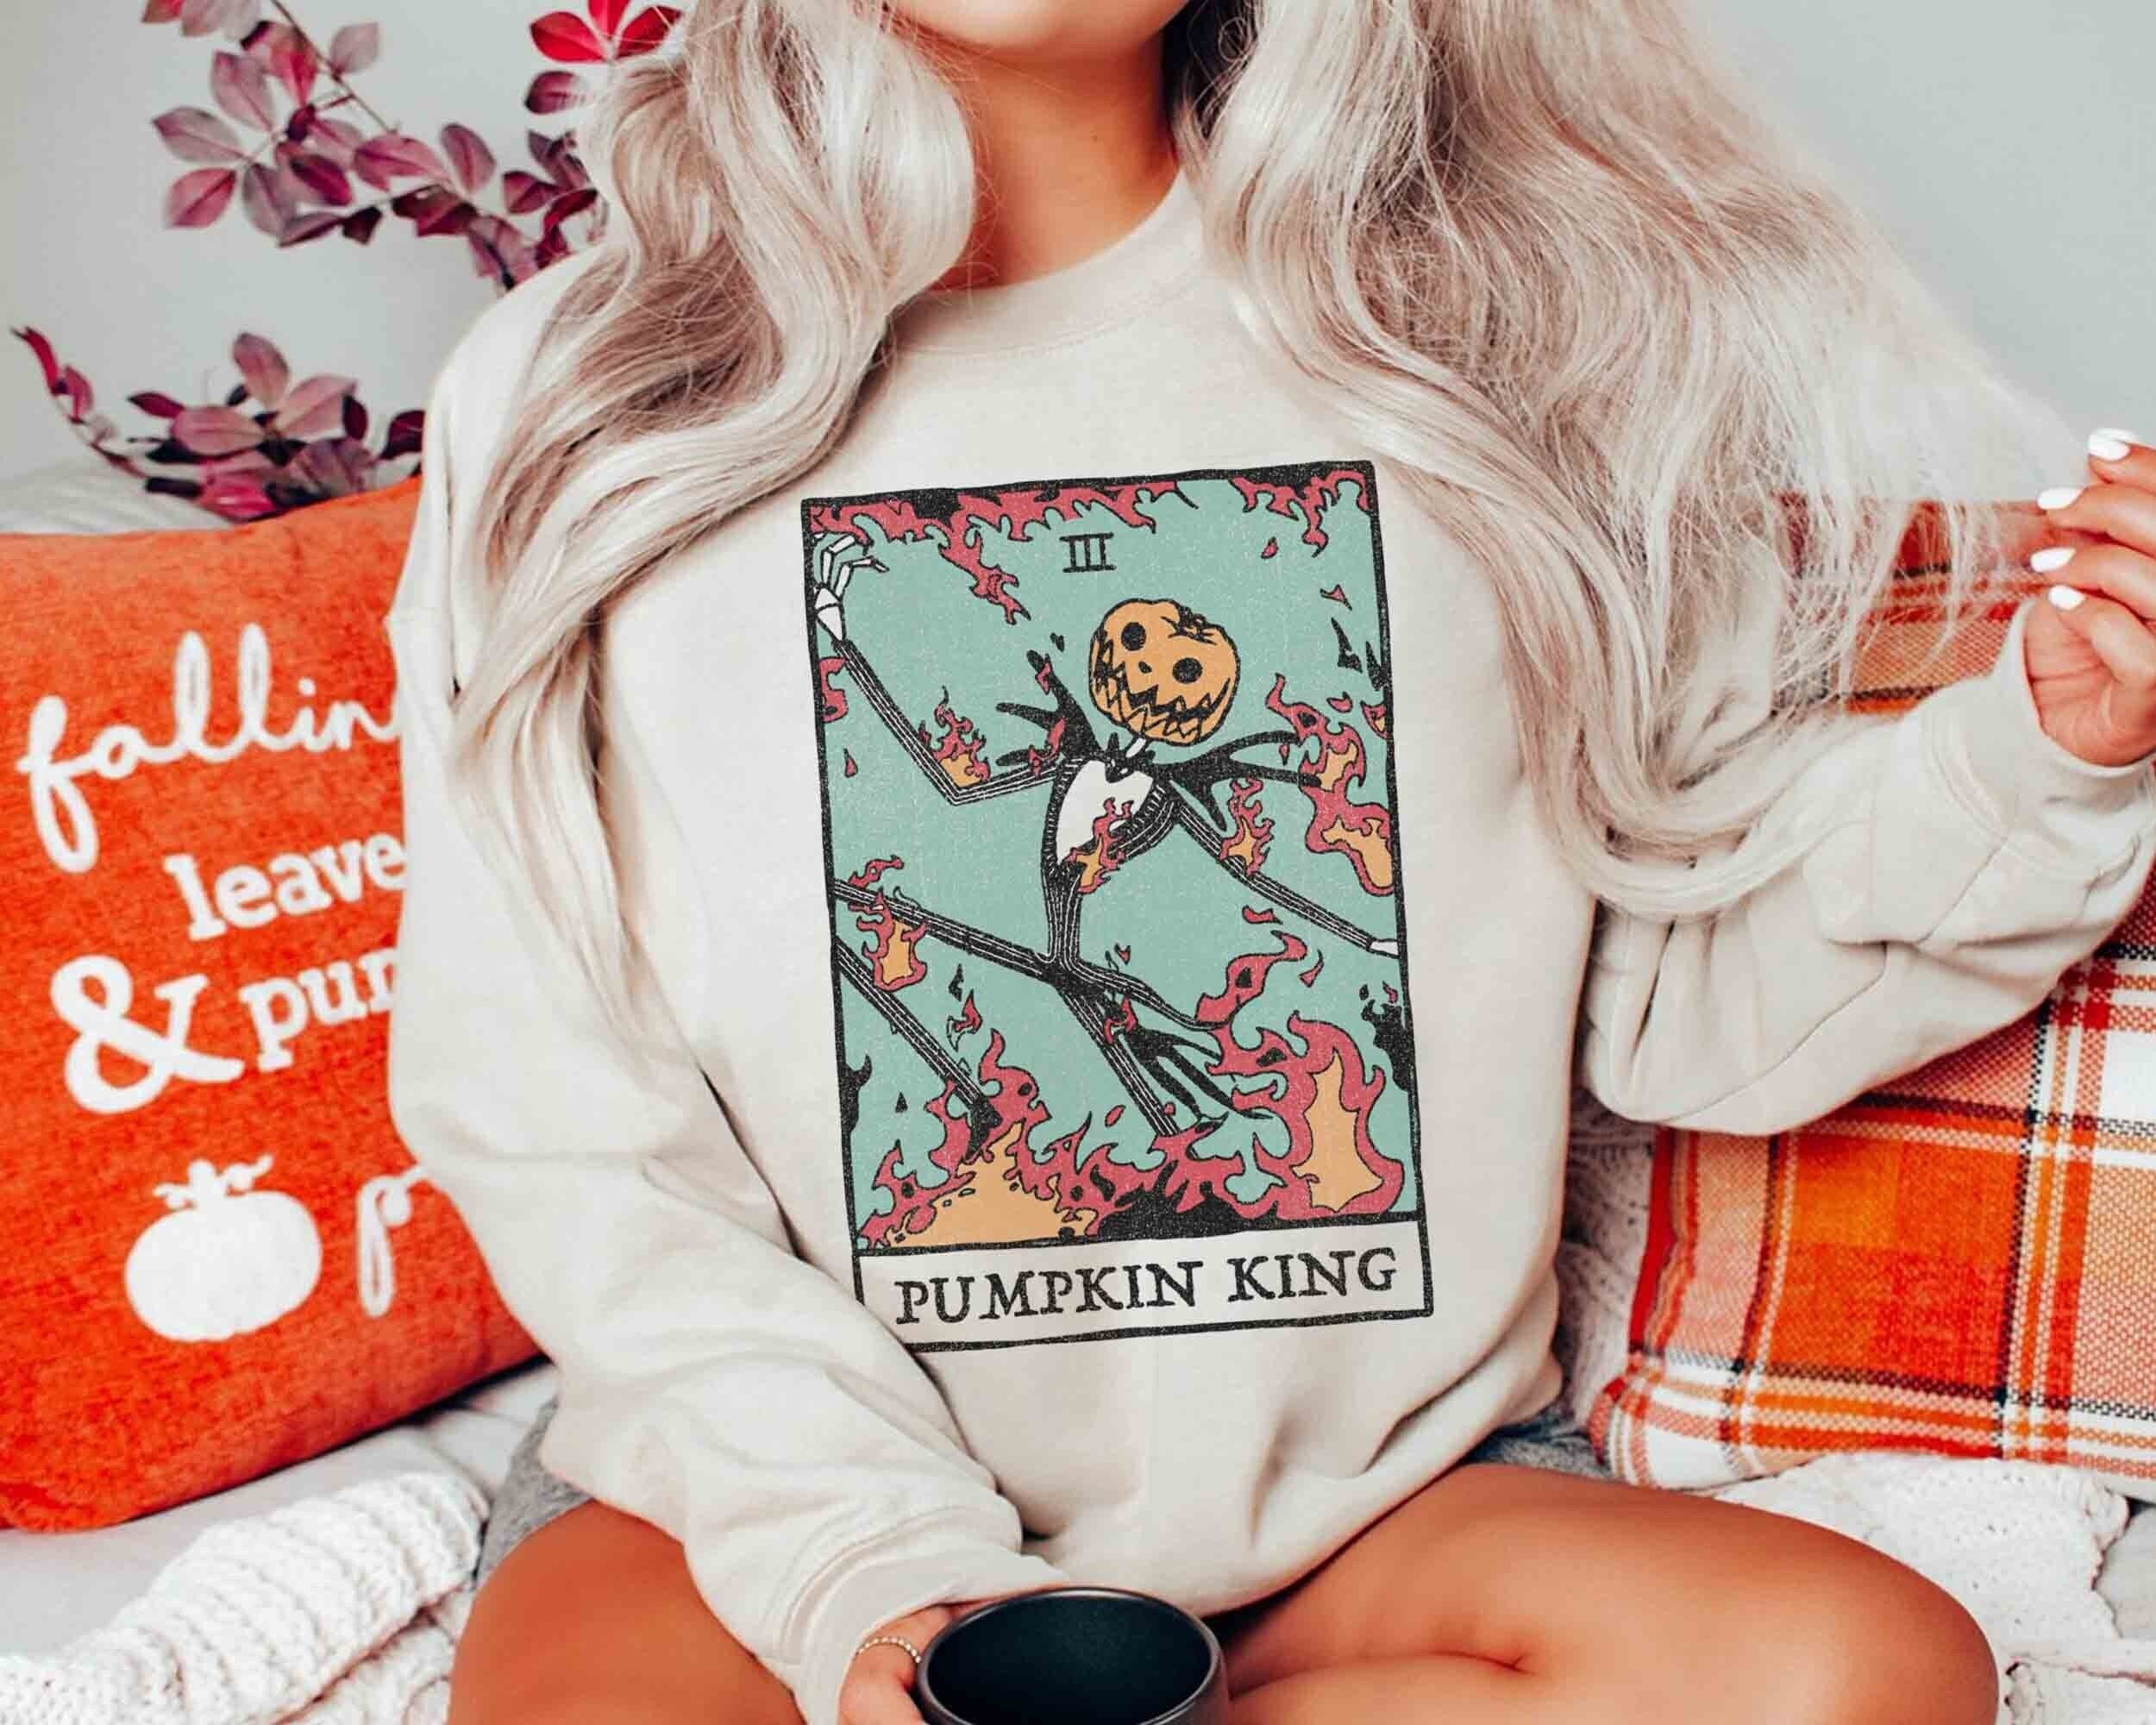 Vintage Jack Skellington Pumpkin King Tarot Card Shirt, Disney Nightmare Before Christmas Oogie Boogie Bash Tee, Disneyland Halloween Family